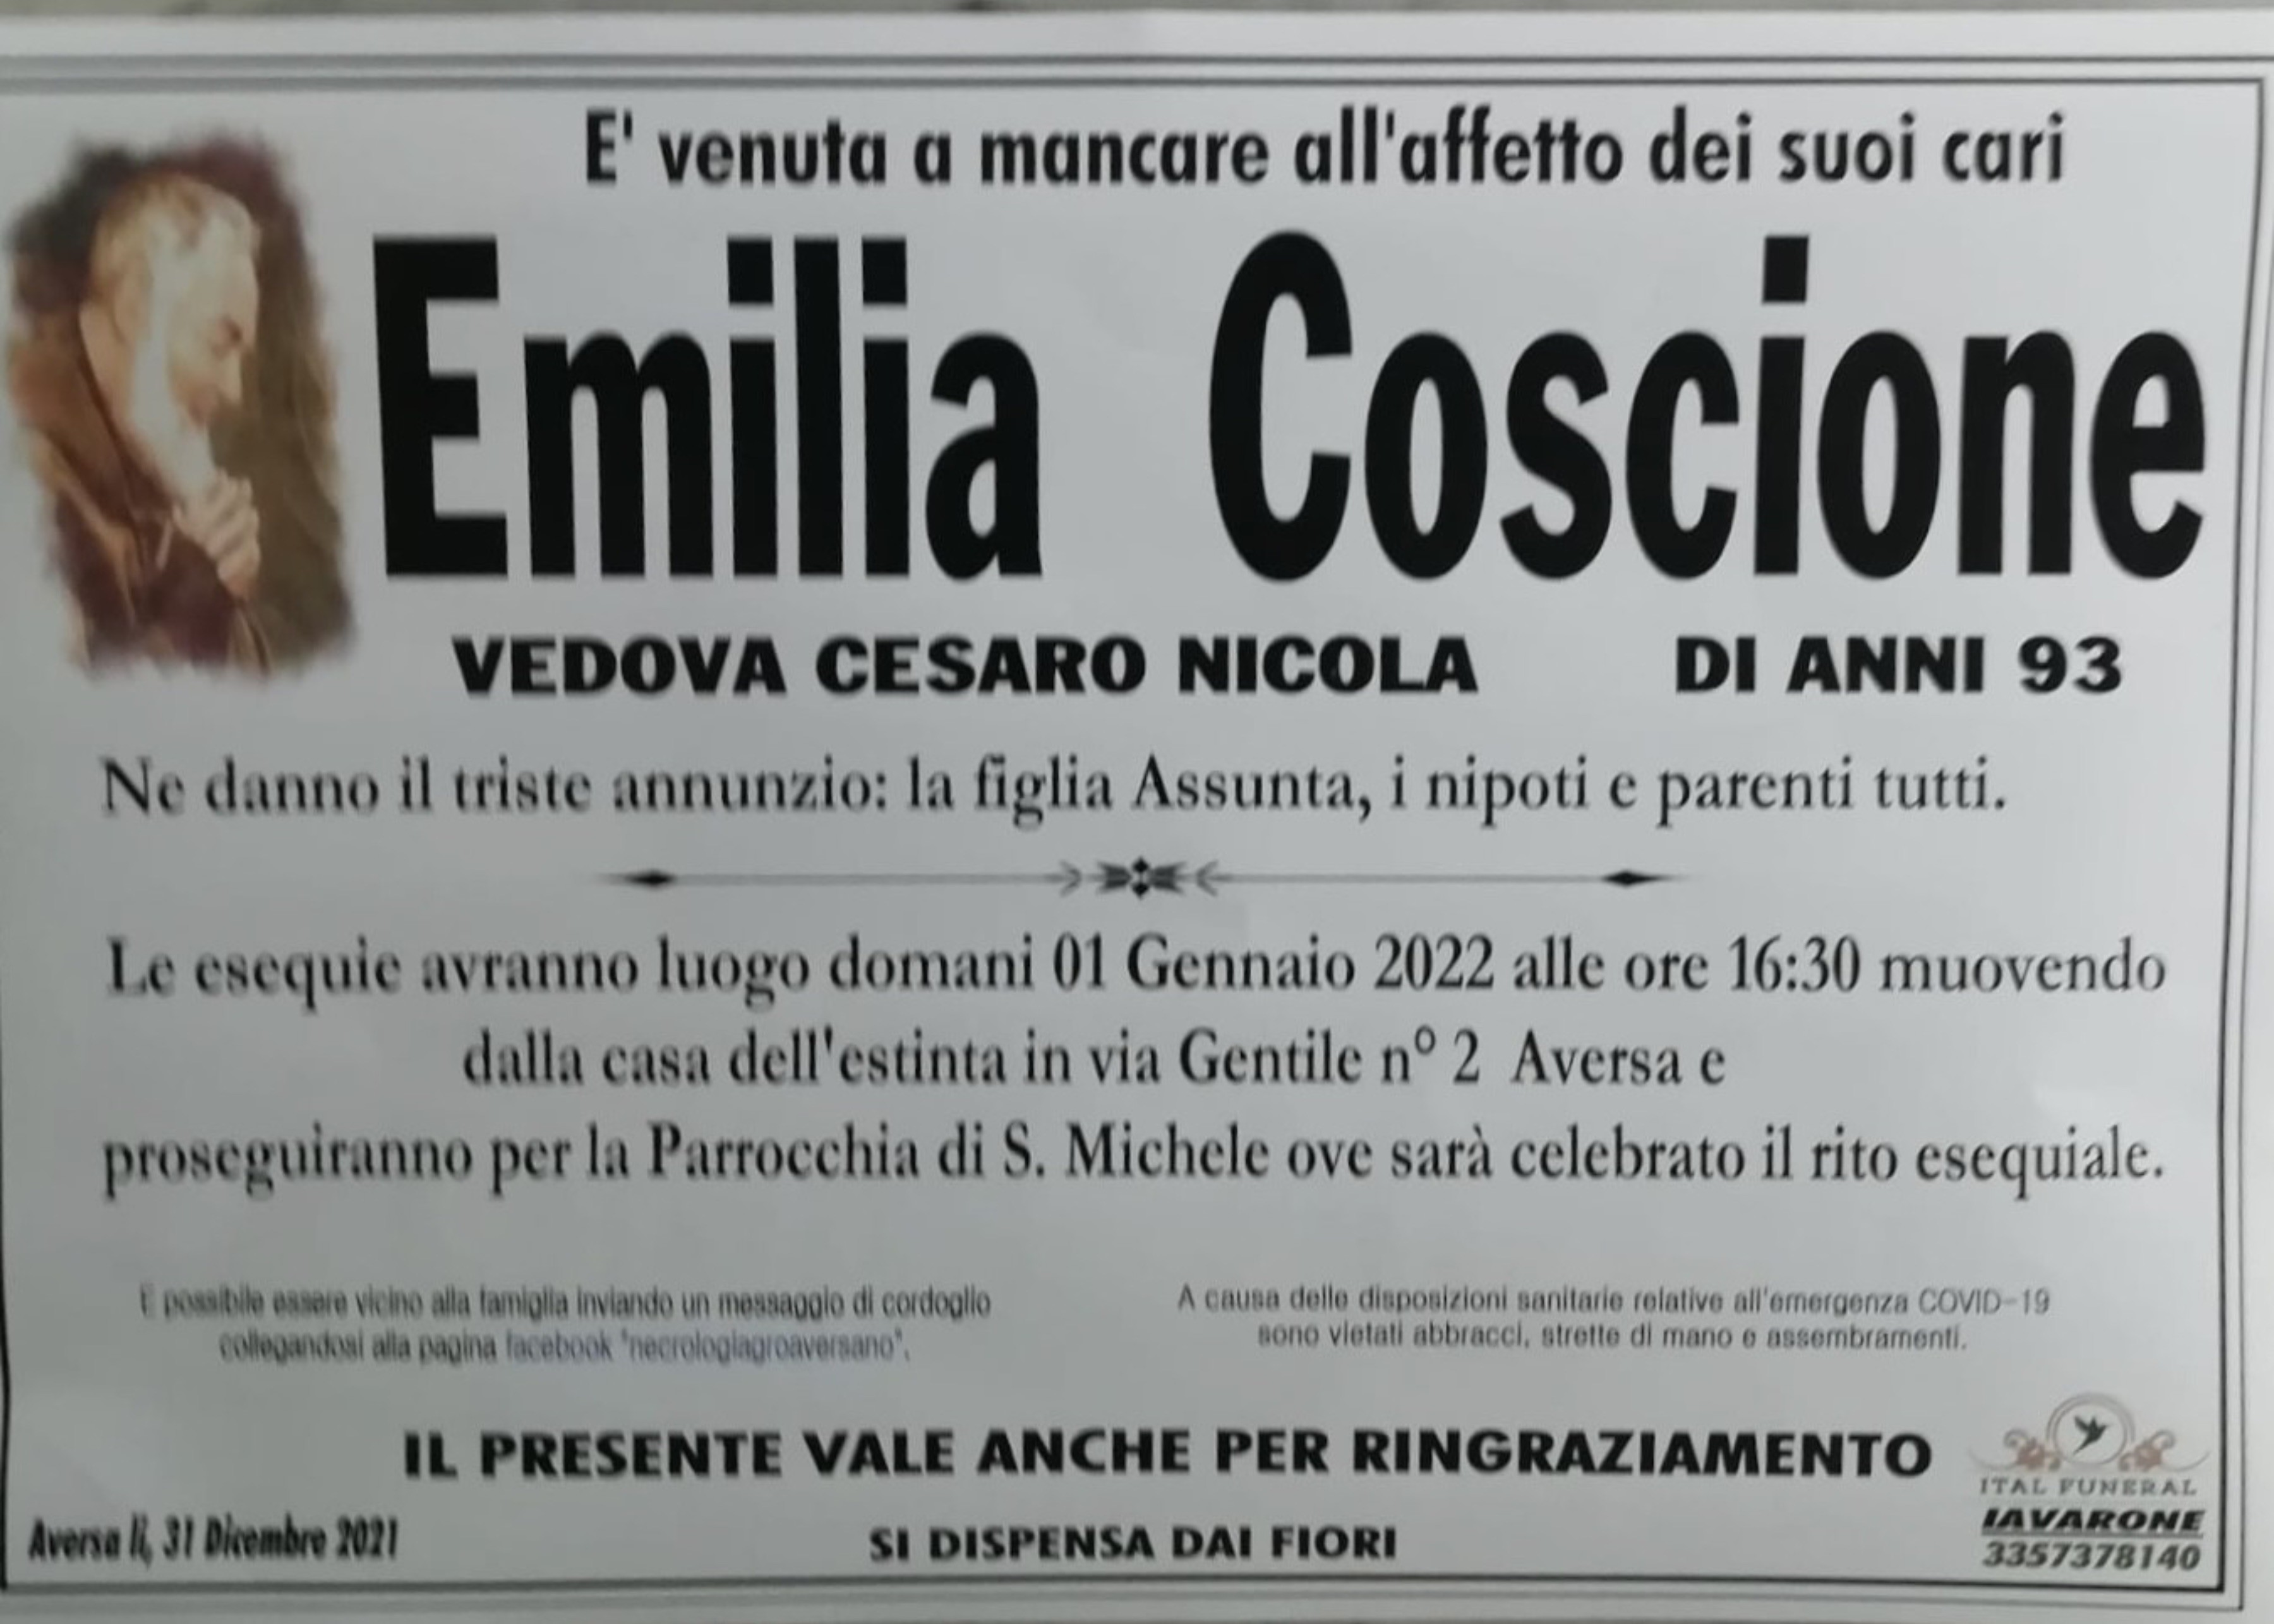 Emilia Coscione